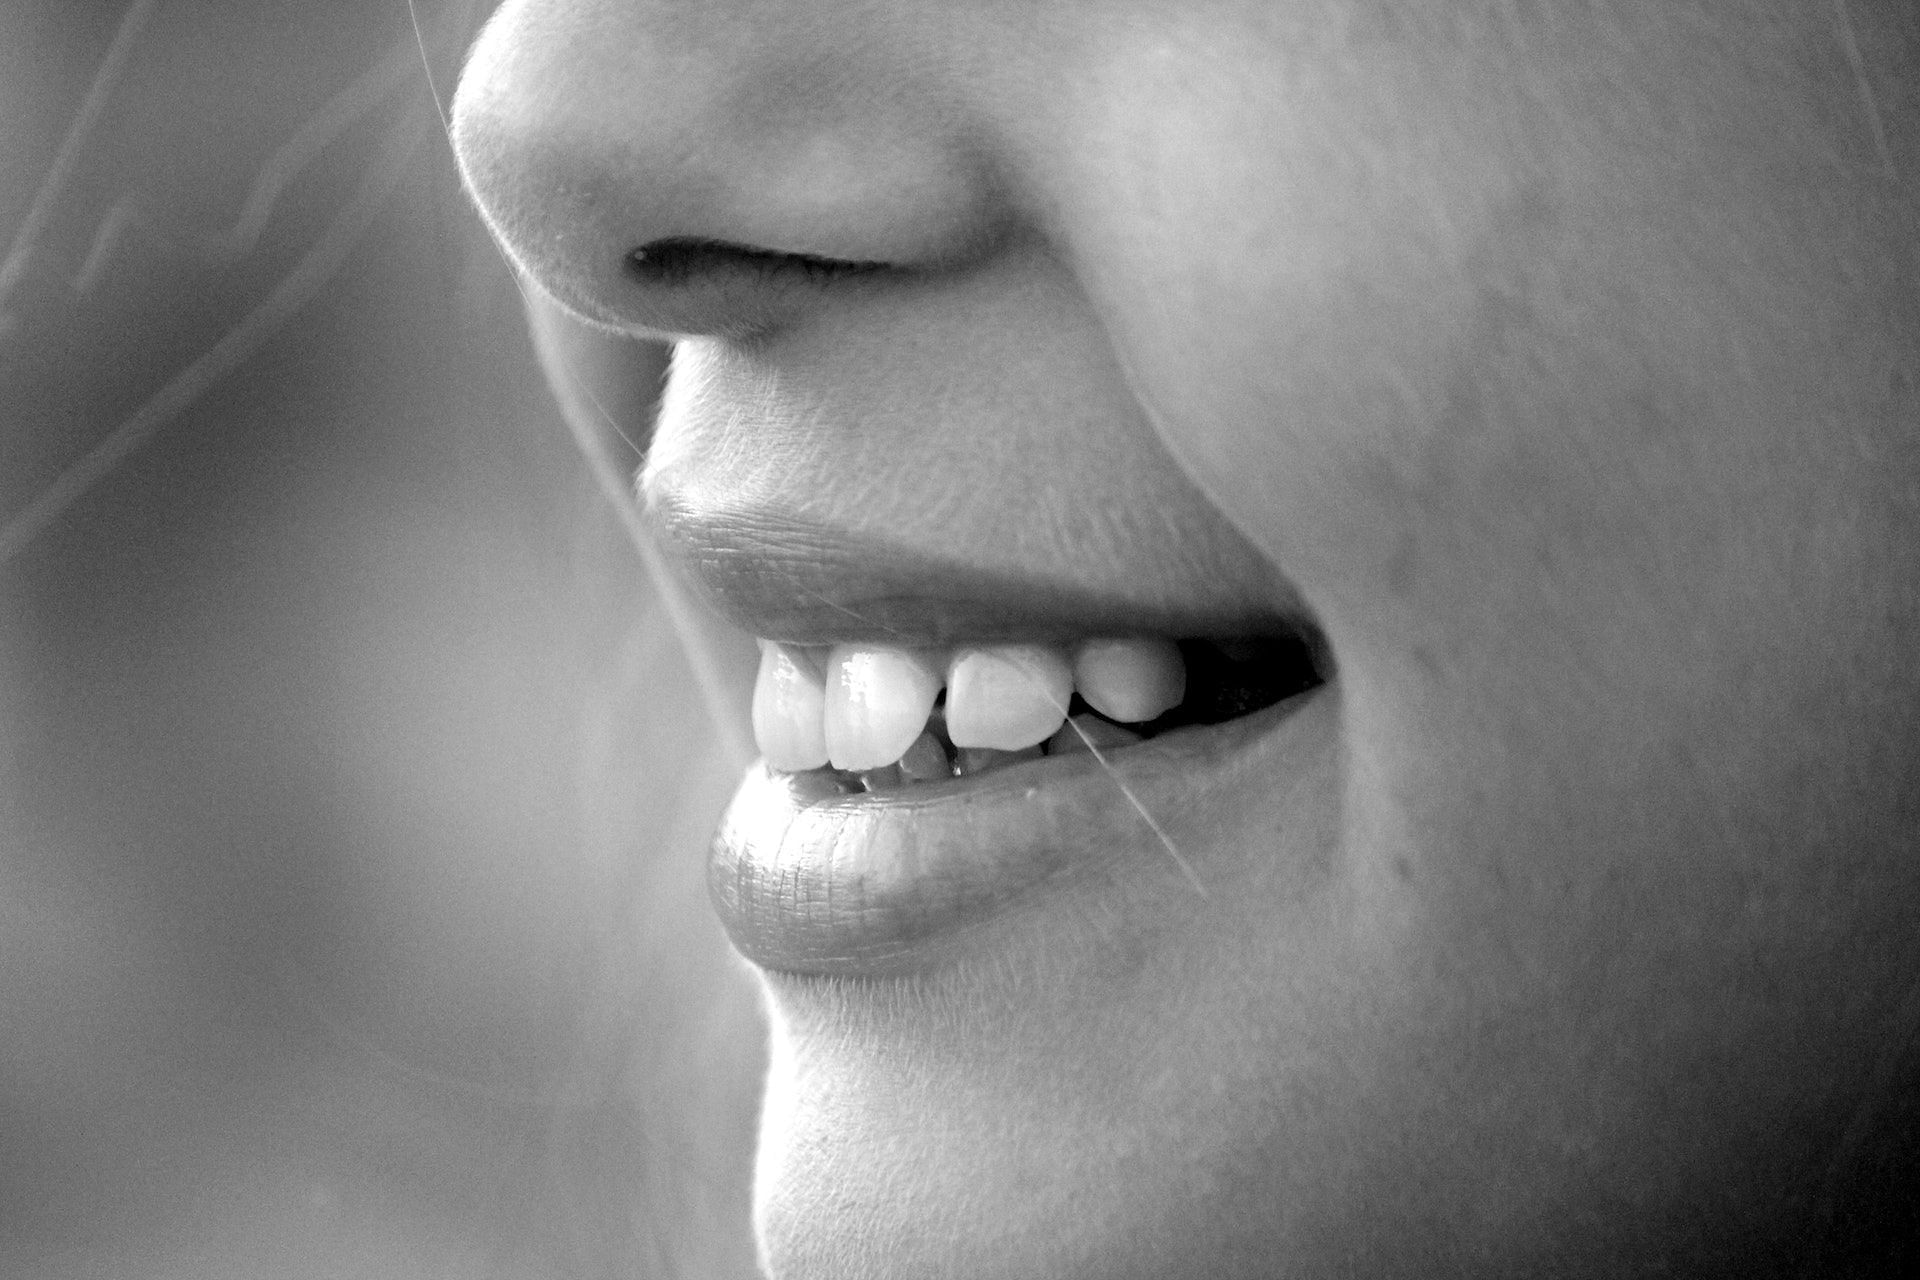 Cranberries prevent tooth decay. (Photo via Pexels/Pixabay)